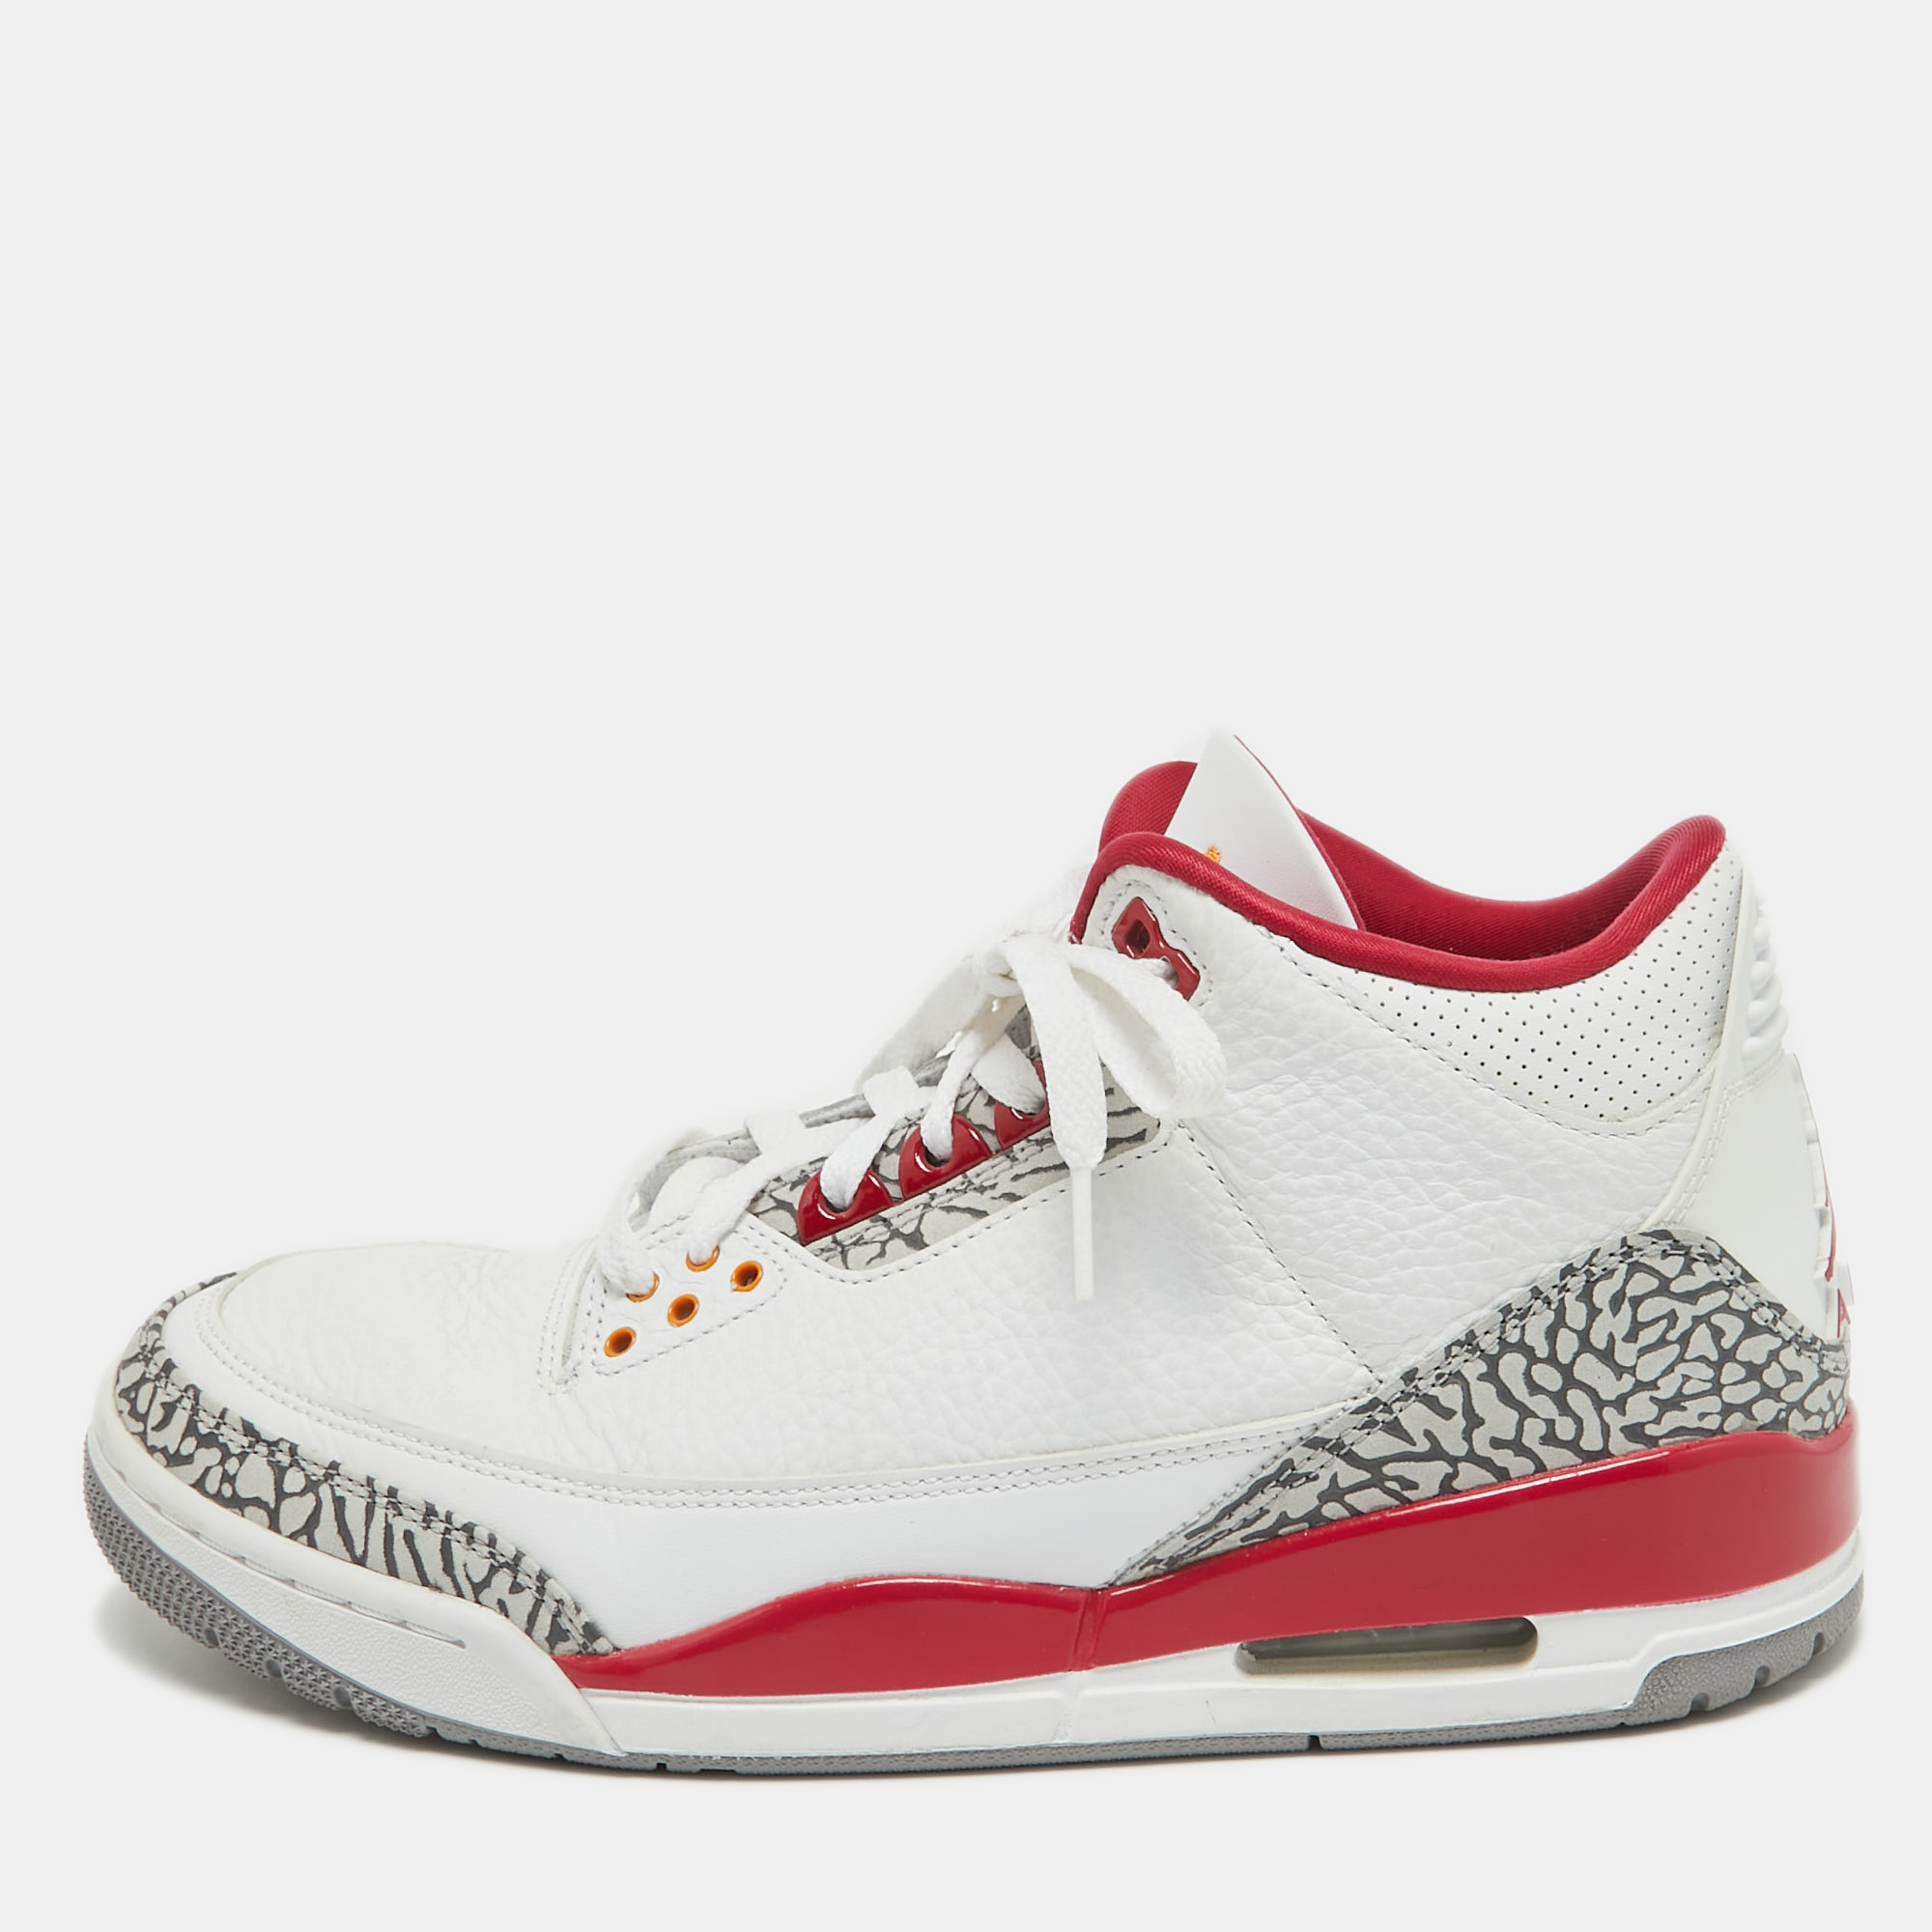 

Air Jordans White/Grey Leather Jordan 3 Retro Cardinal Red Sneakers Size 43